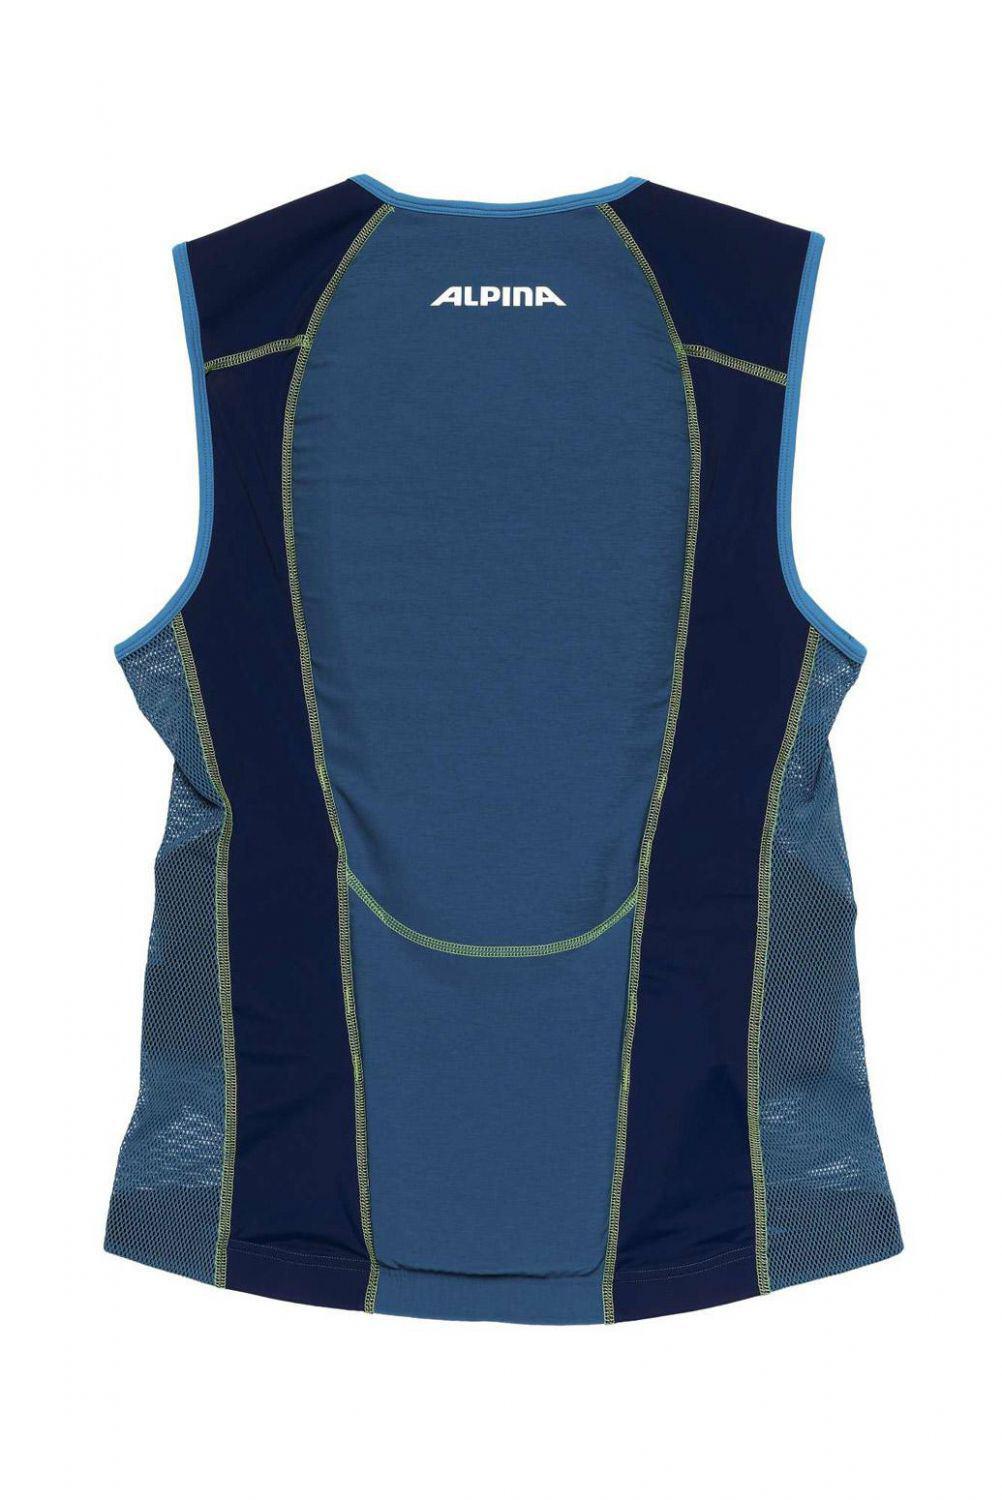 Alpina Jacket Soft Protector Men Vest (XXL = Körpergröße ca. >190 cm, 82 navy/green) von Alpina